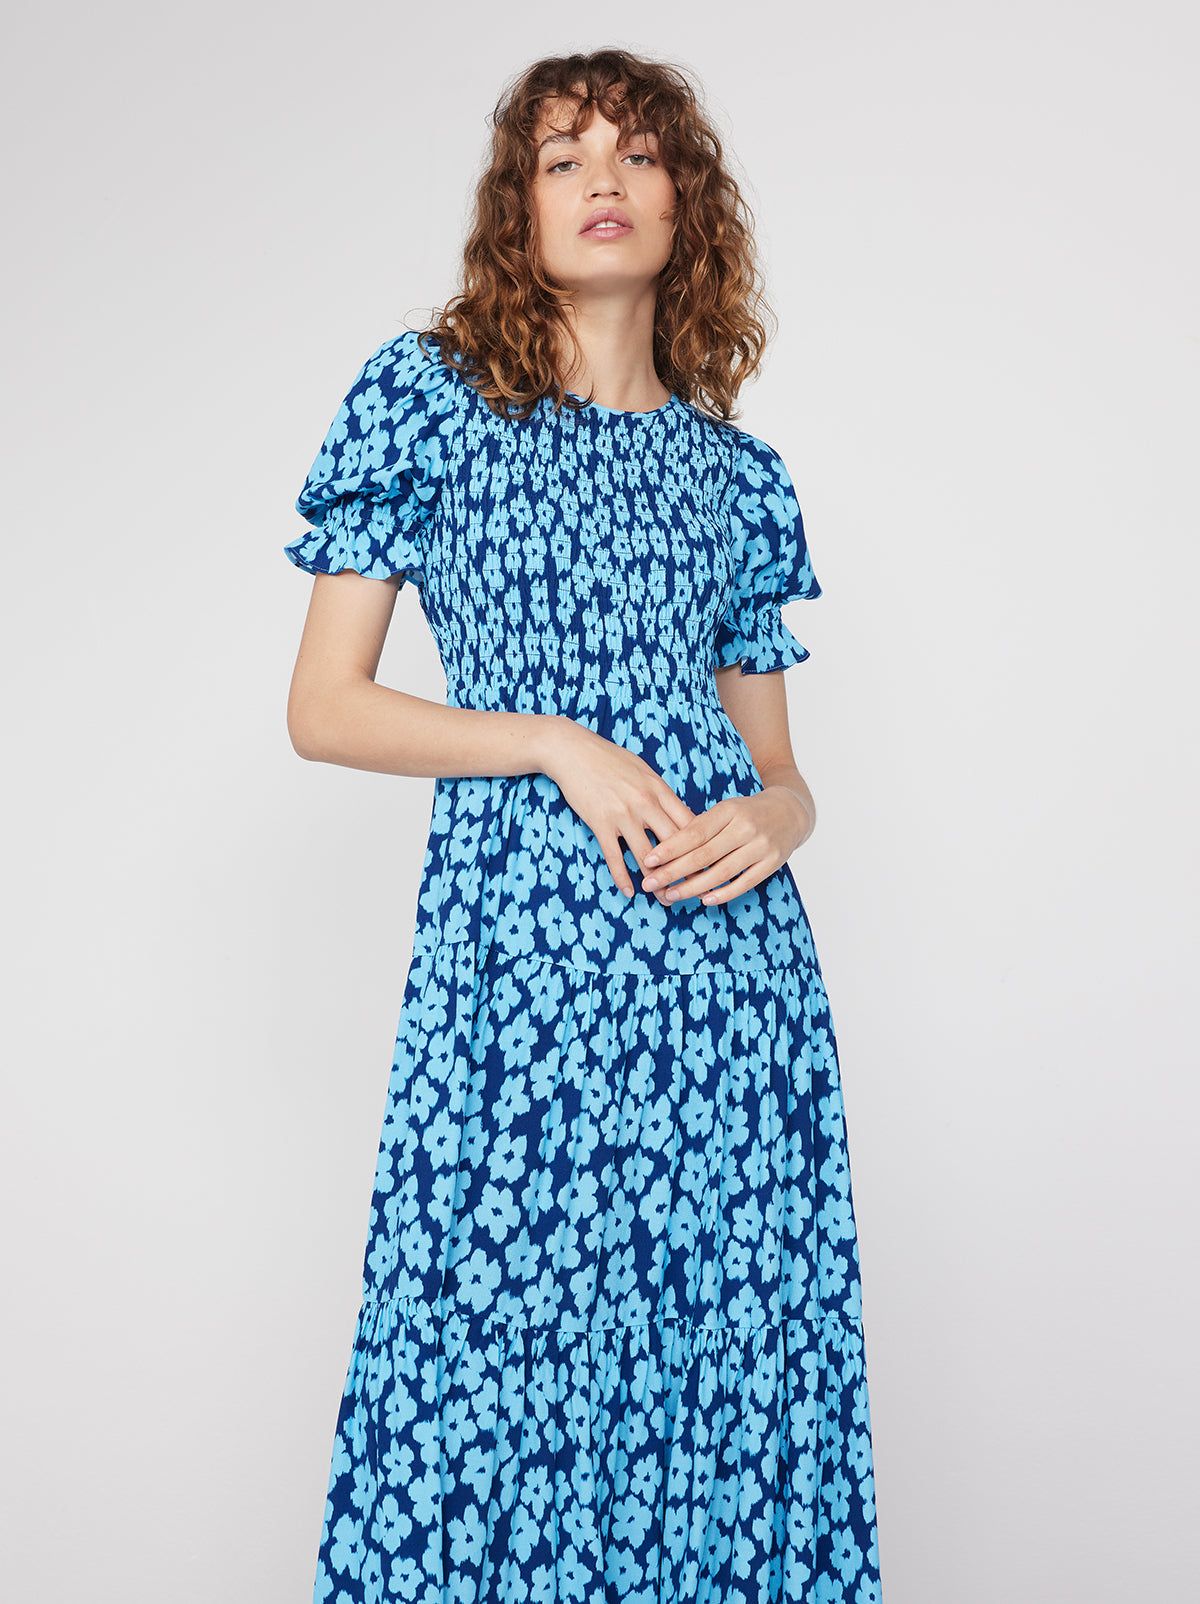 Persephone Blue Blurred Floral Midi Dress By KITRI Studio